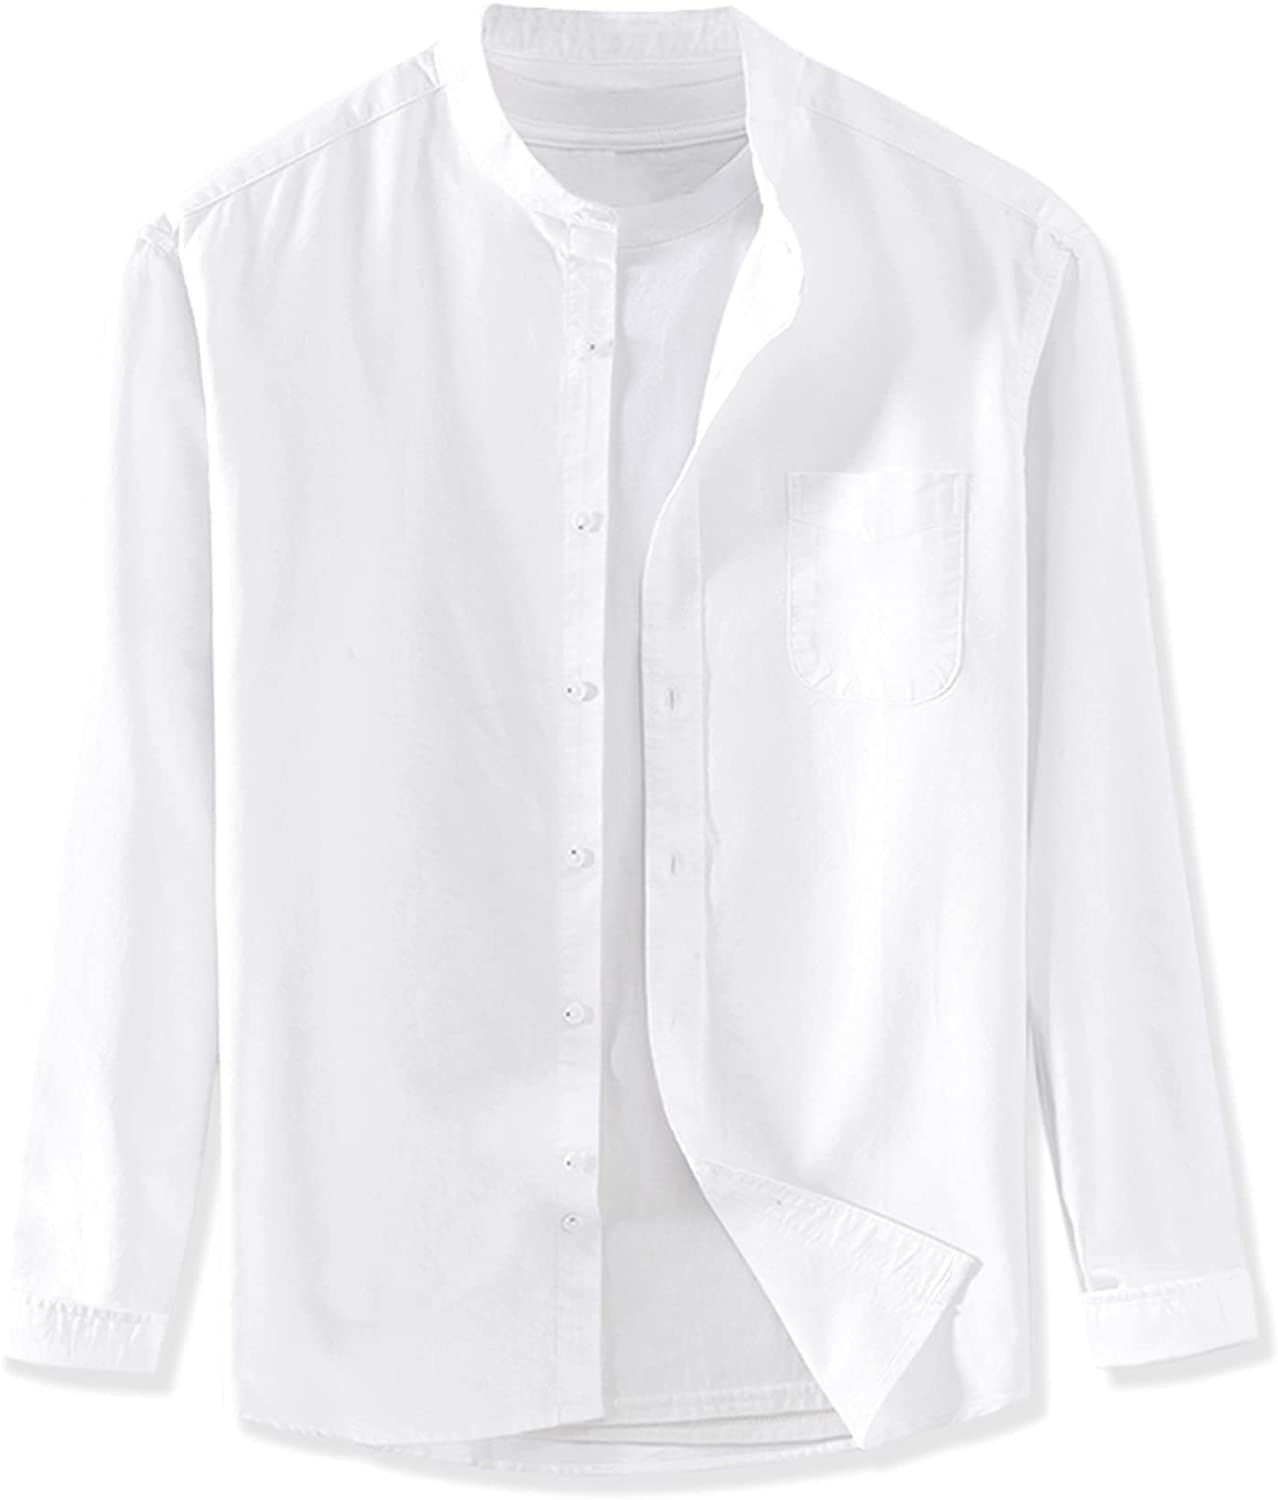 TATT 21 Men Banded Collar Shirt Washed Cotton Long Sleeve Casual Button Down Shirts